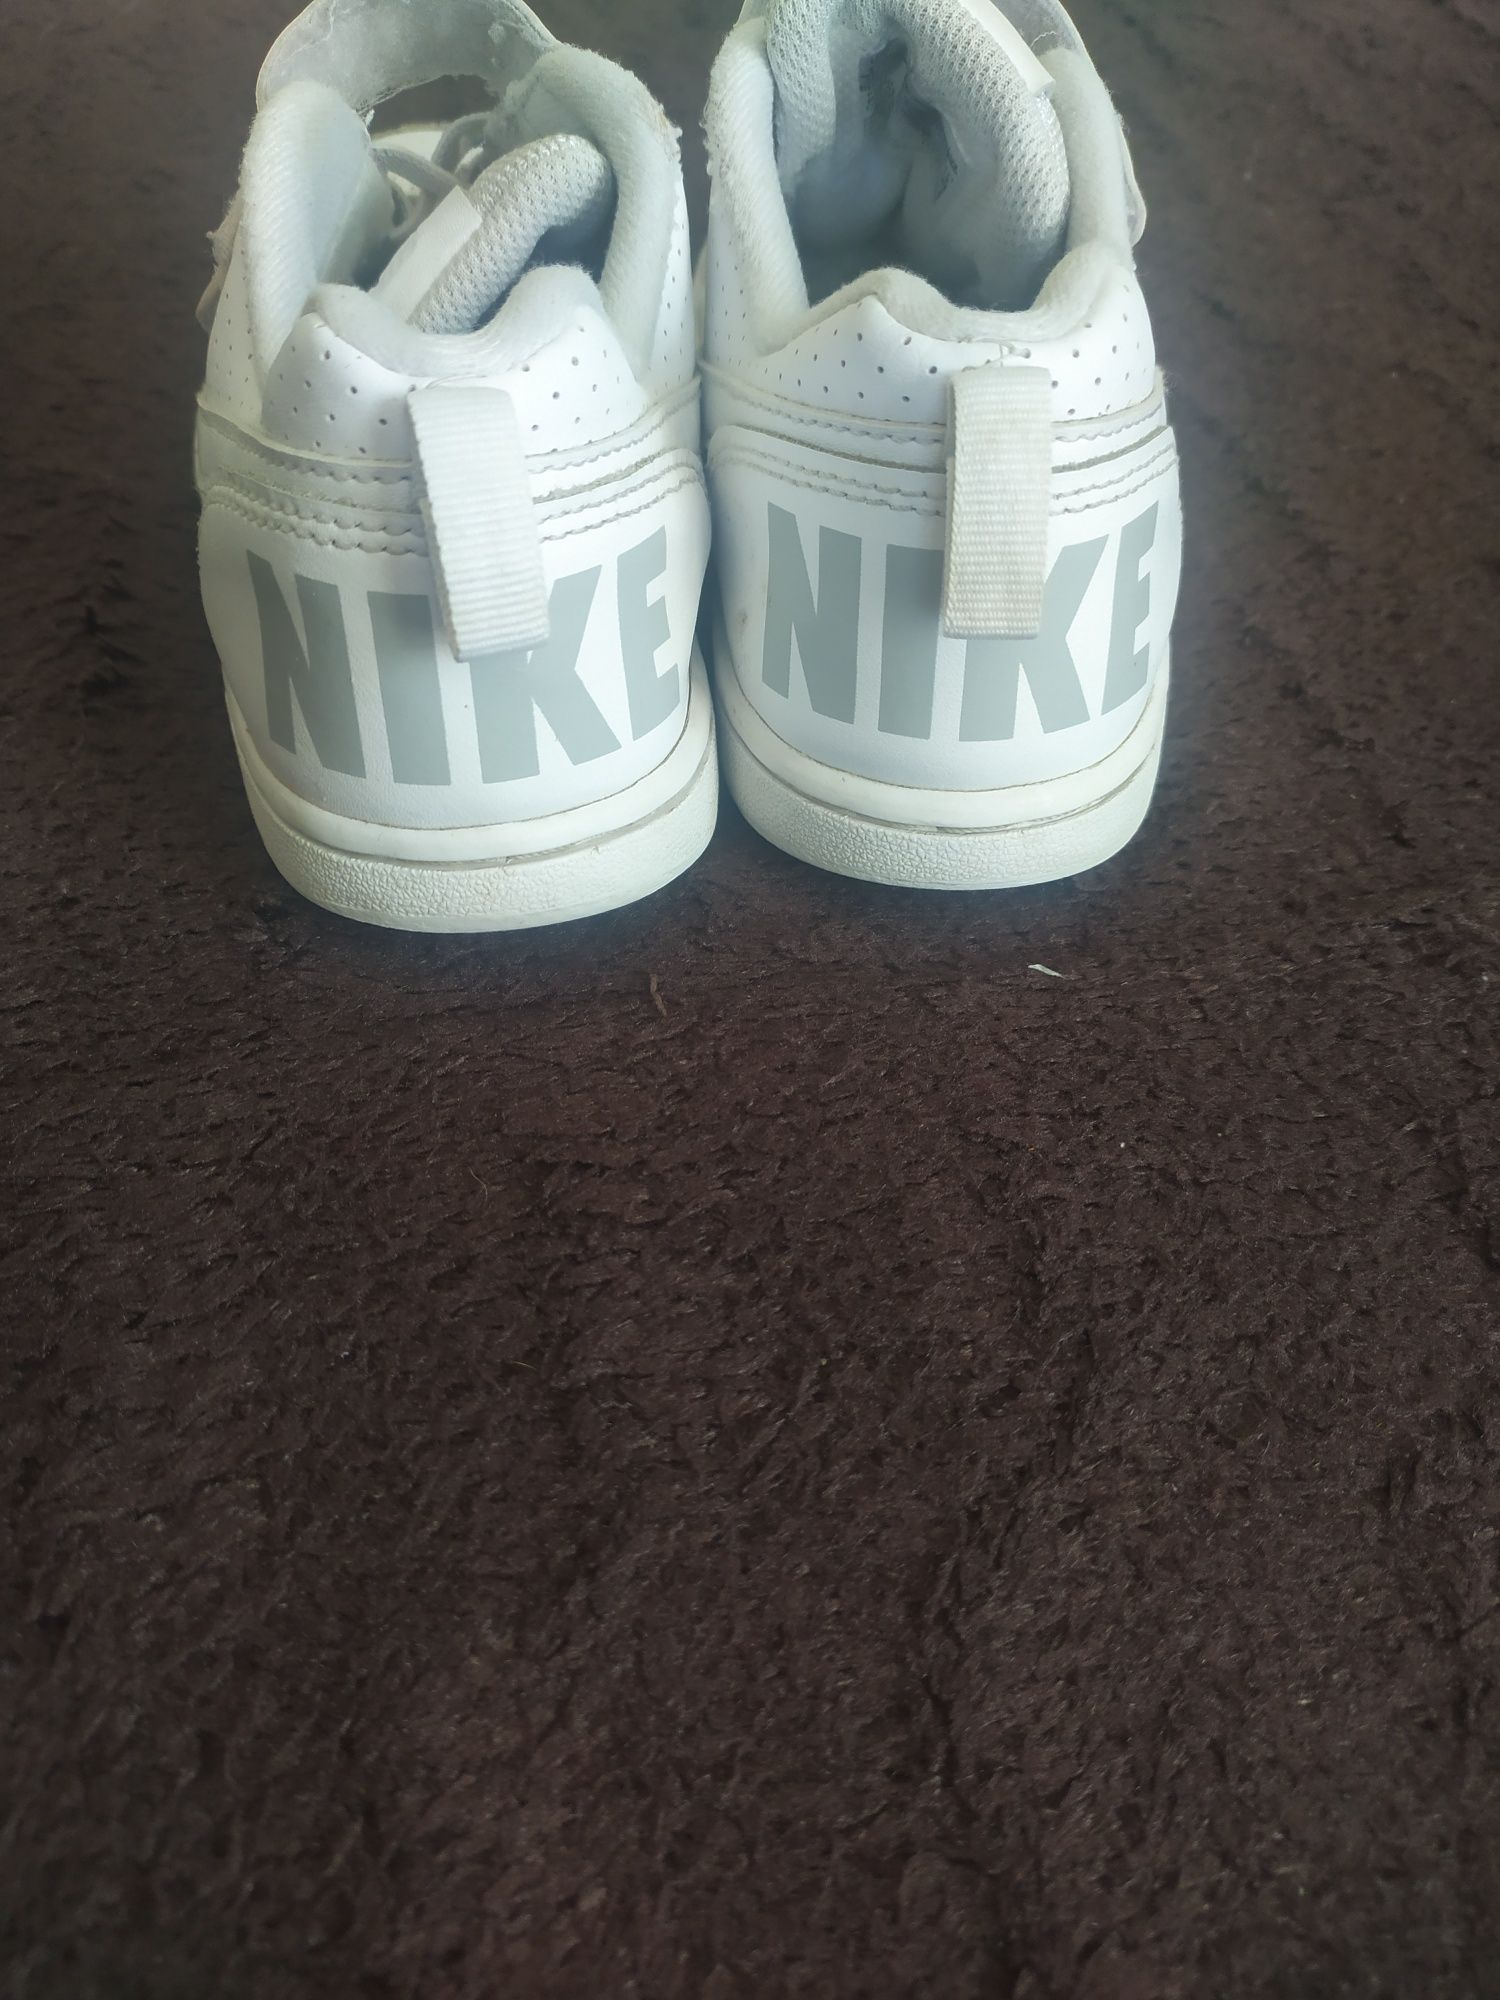 Adidasy białe Nike 32